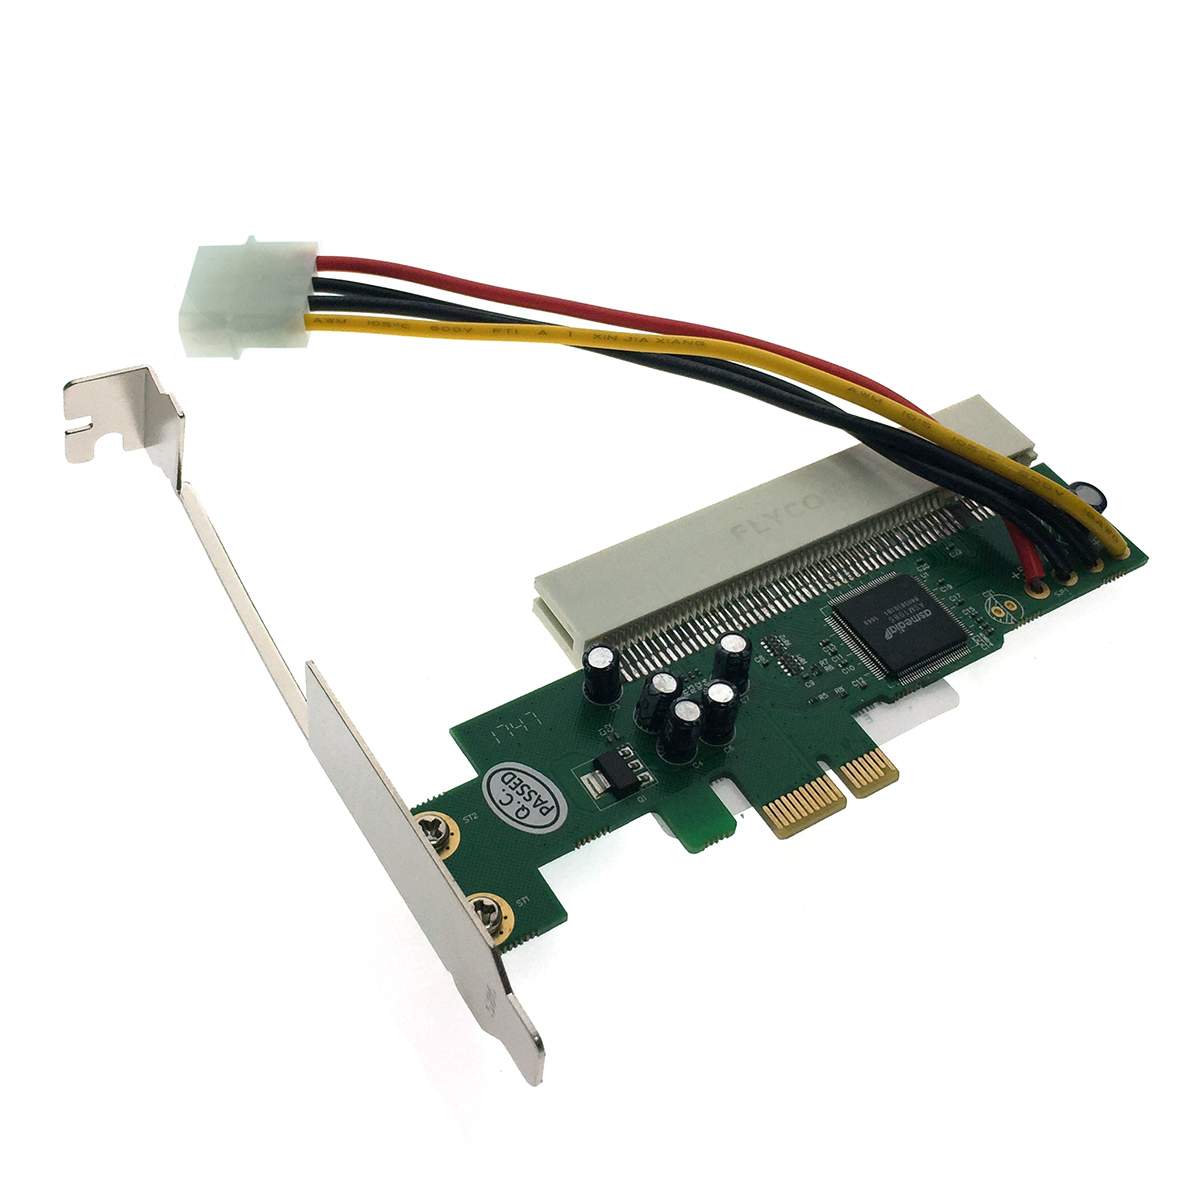 Адаптер PCI-E x1 male to PCI female 4 pin power, EPCIF-PCIM4pAd, купить в Москве, цены в интернет-магазинах на Мегамаркет